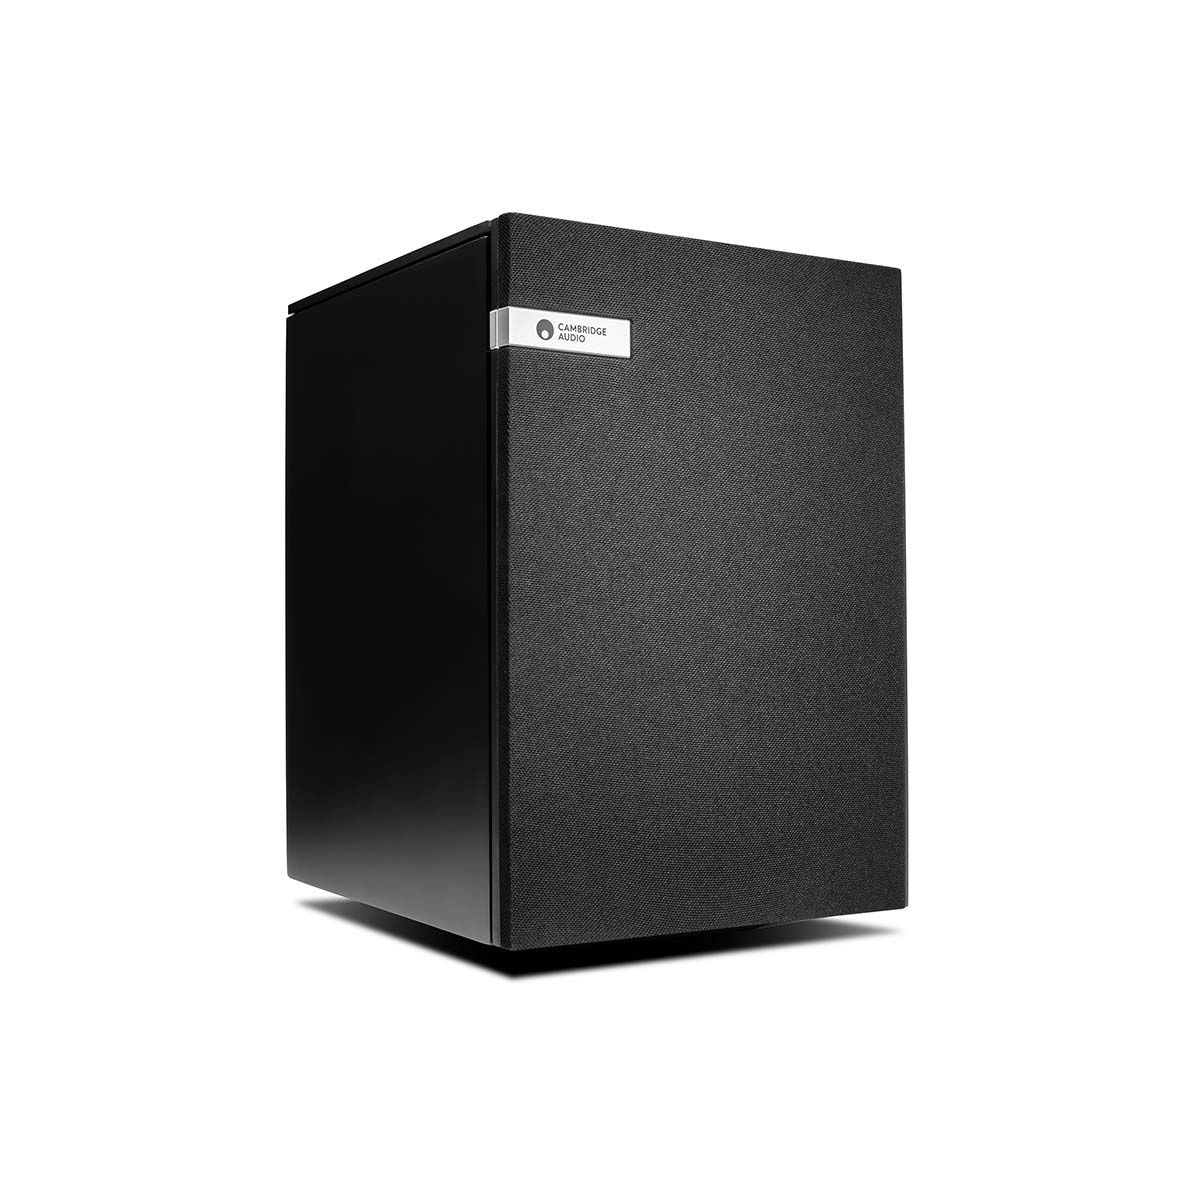 Cambridge Audio EVO S Bookshelf Speakers, black, front angle view with grille